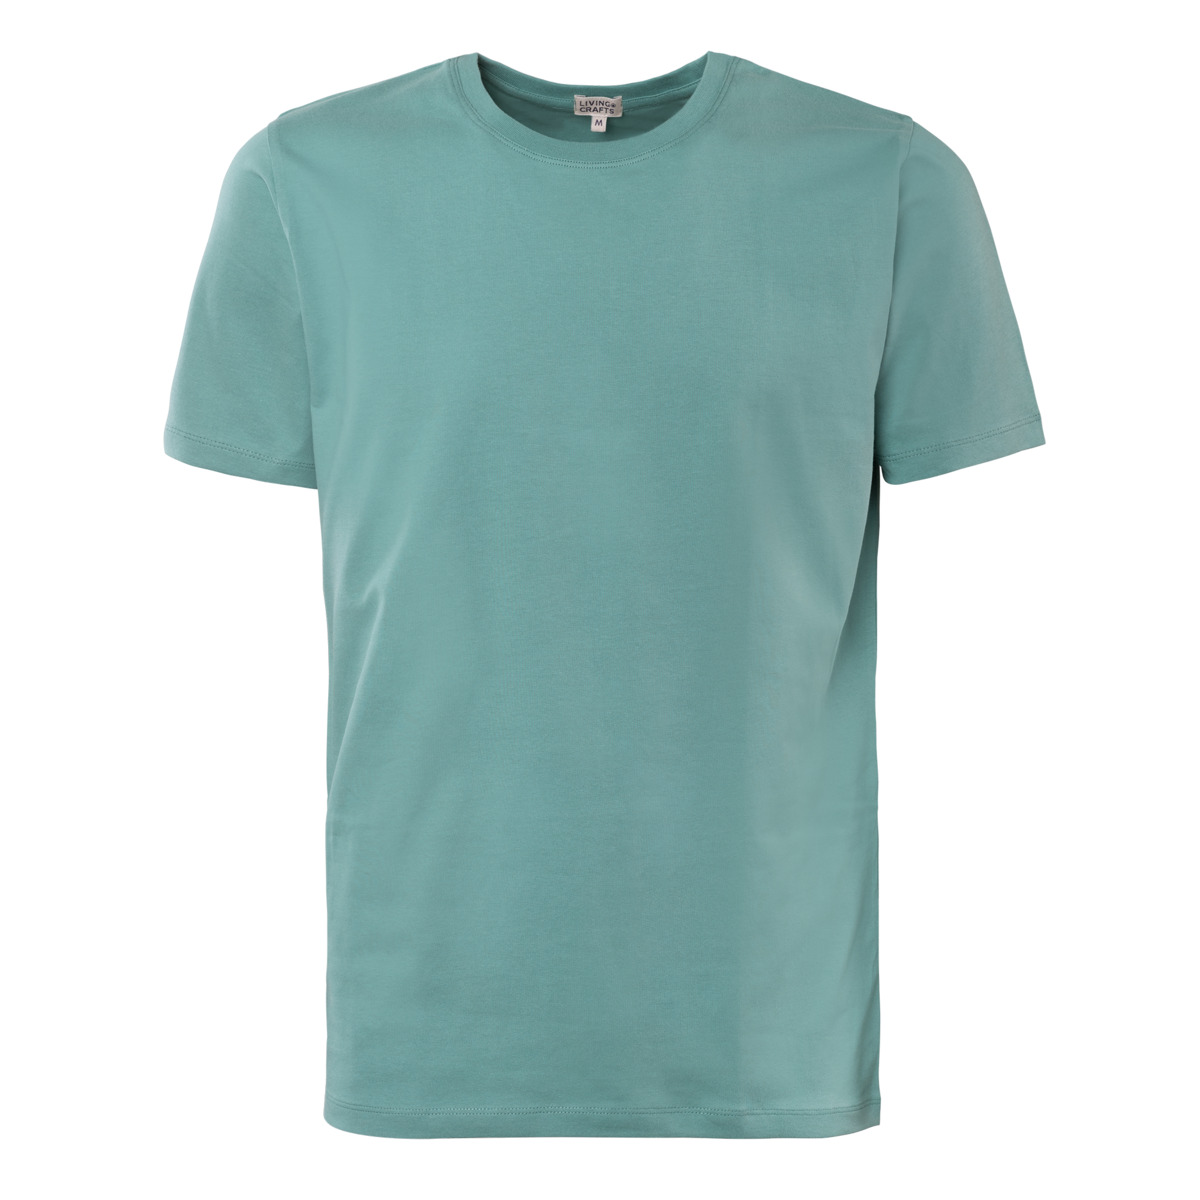 Turquoise T-shirt, ILKO